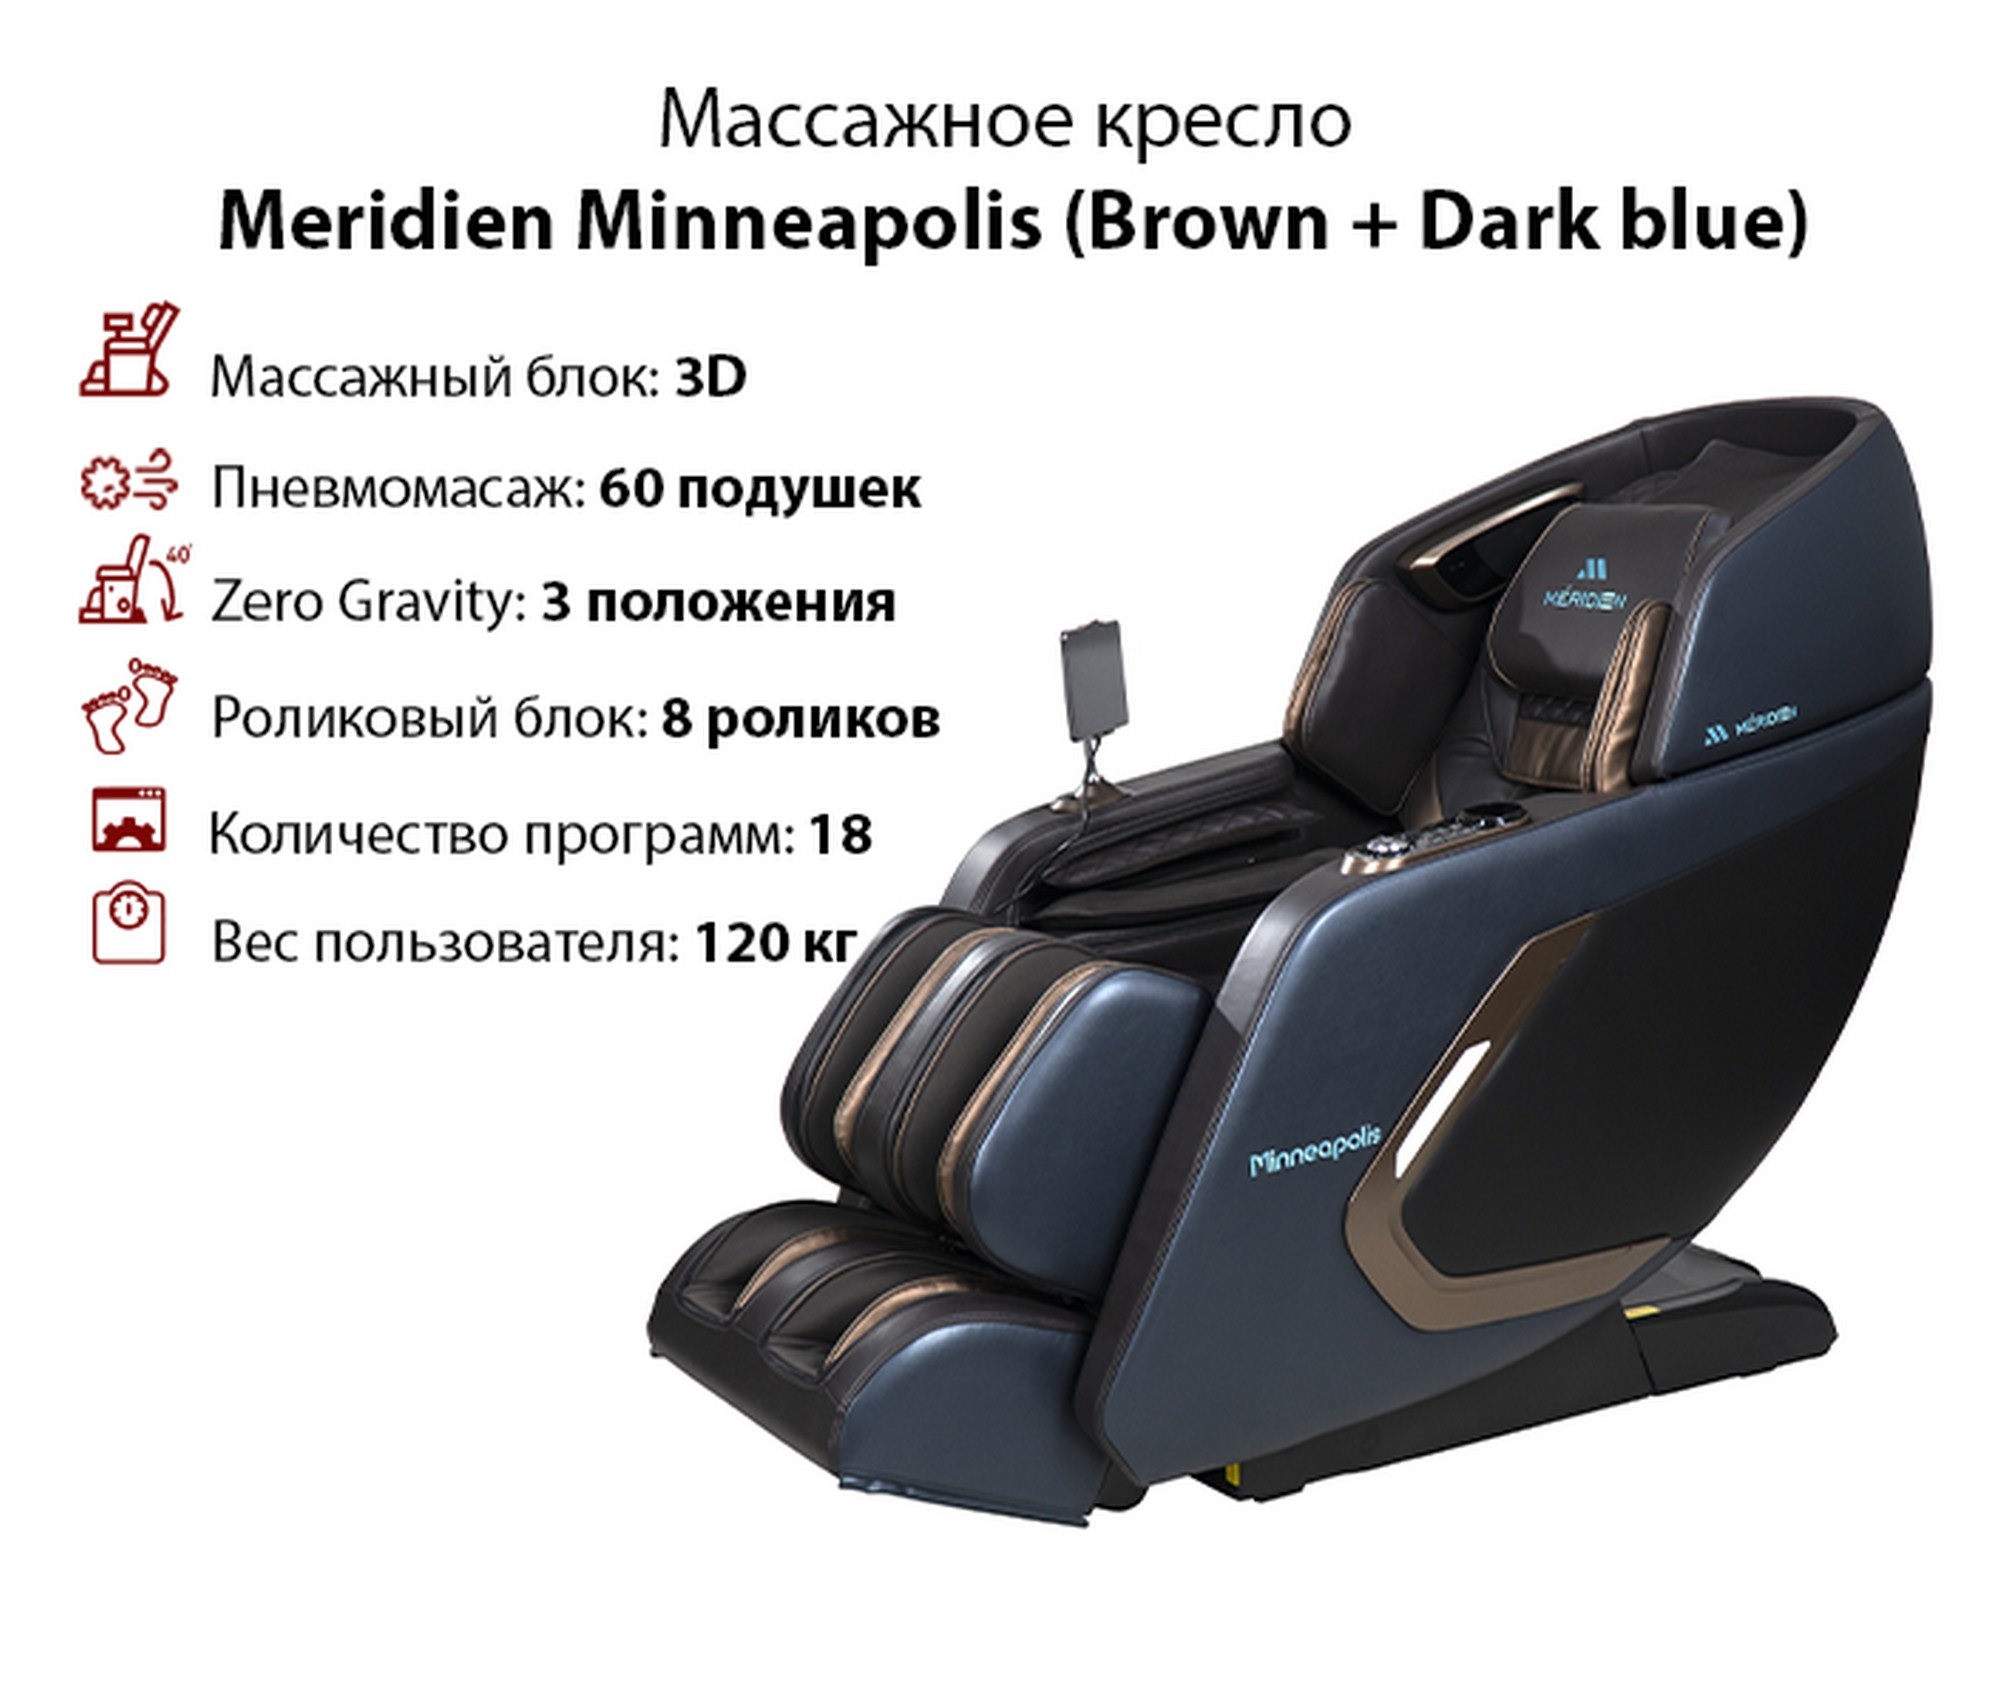 Массажное кресло Meridien Minneapolis Brown + Dark blue 2000_1702